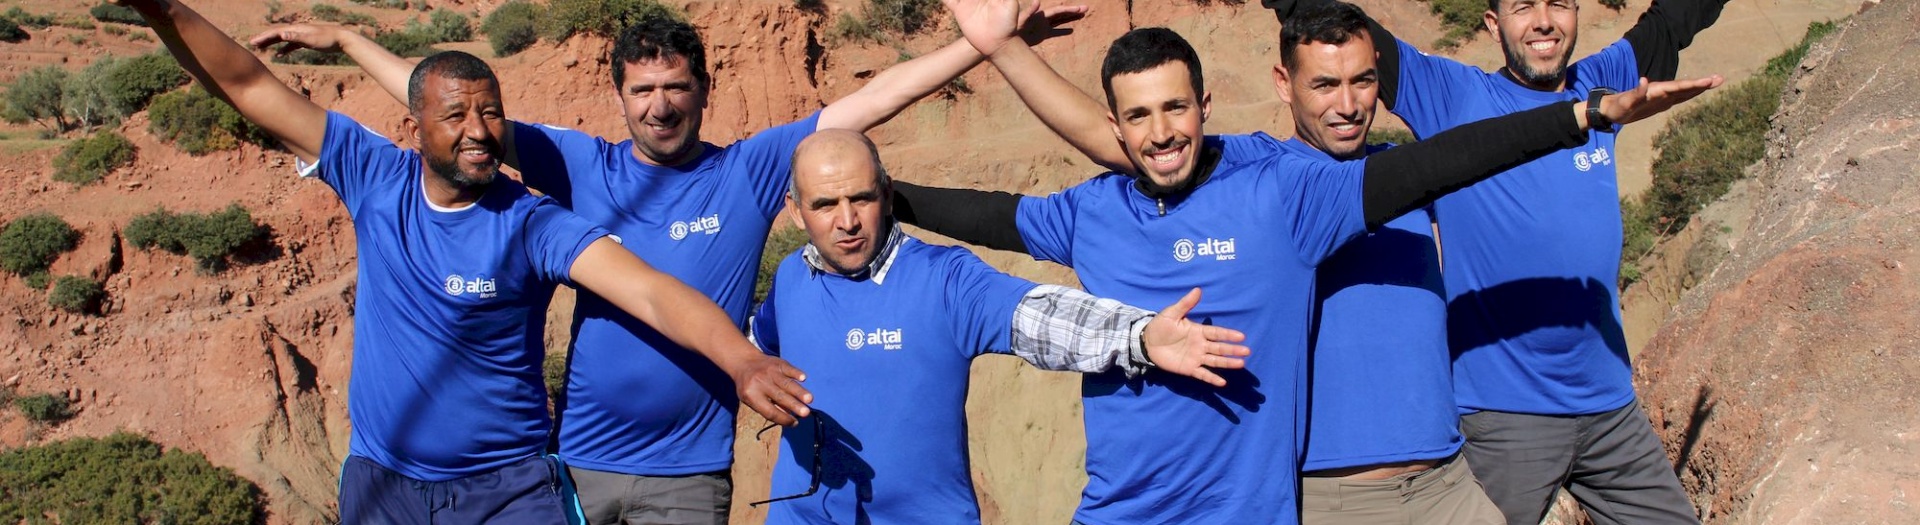 Notre équipe Altaï au Maroc